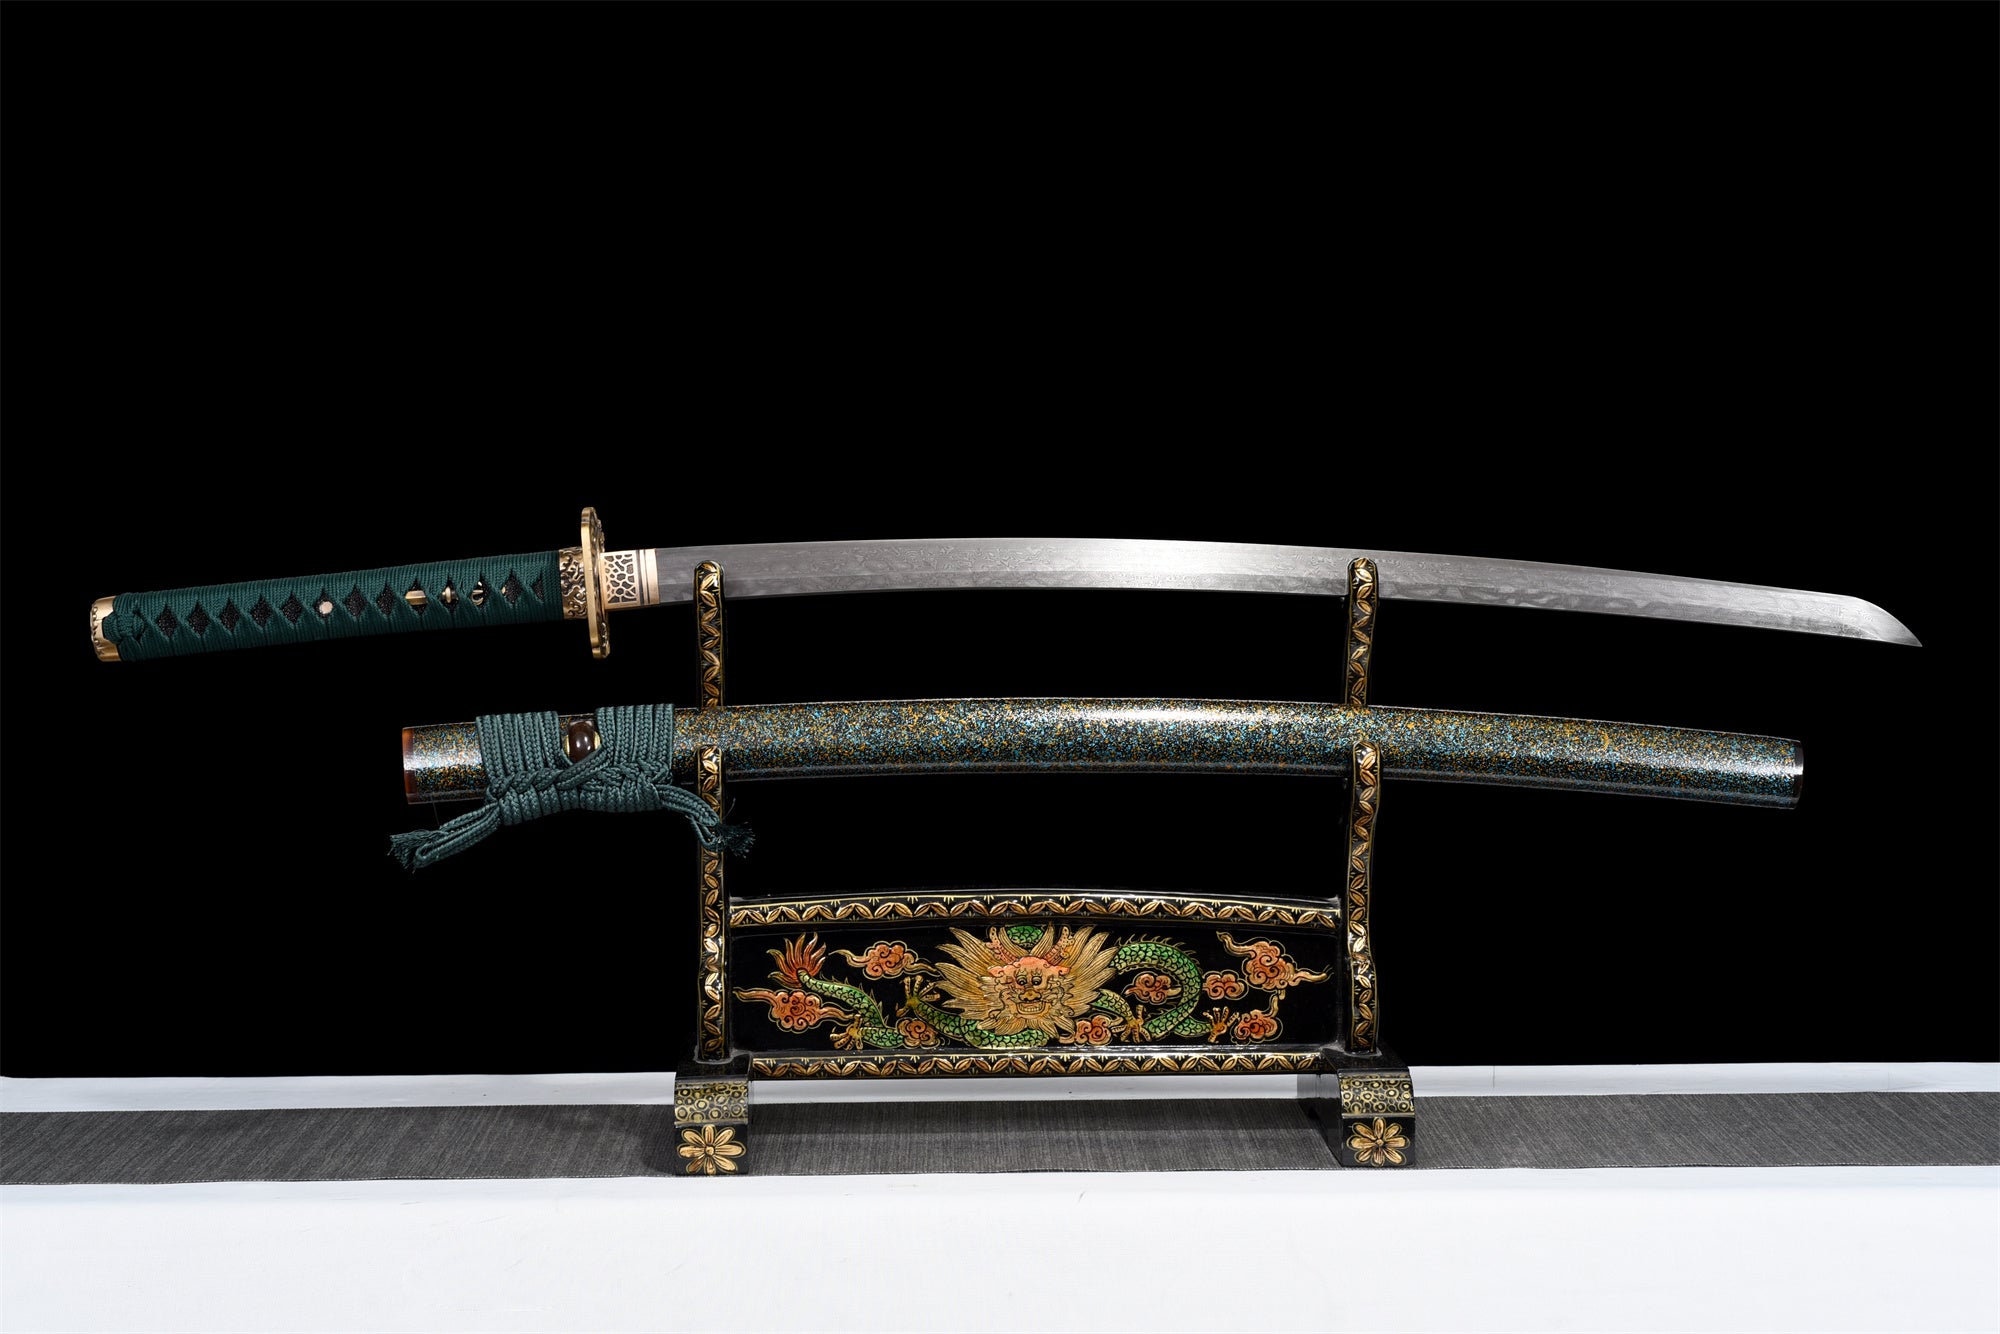 Damascus Steel Handmade Green Katana Sword Real Japanese Samurai Sword Full Tang